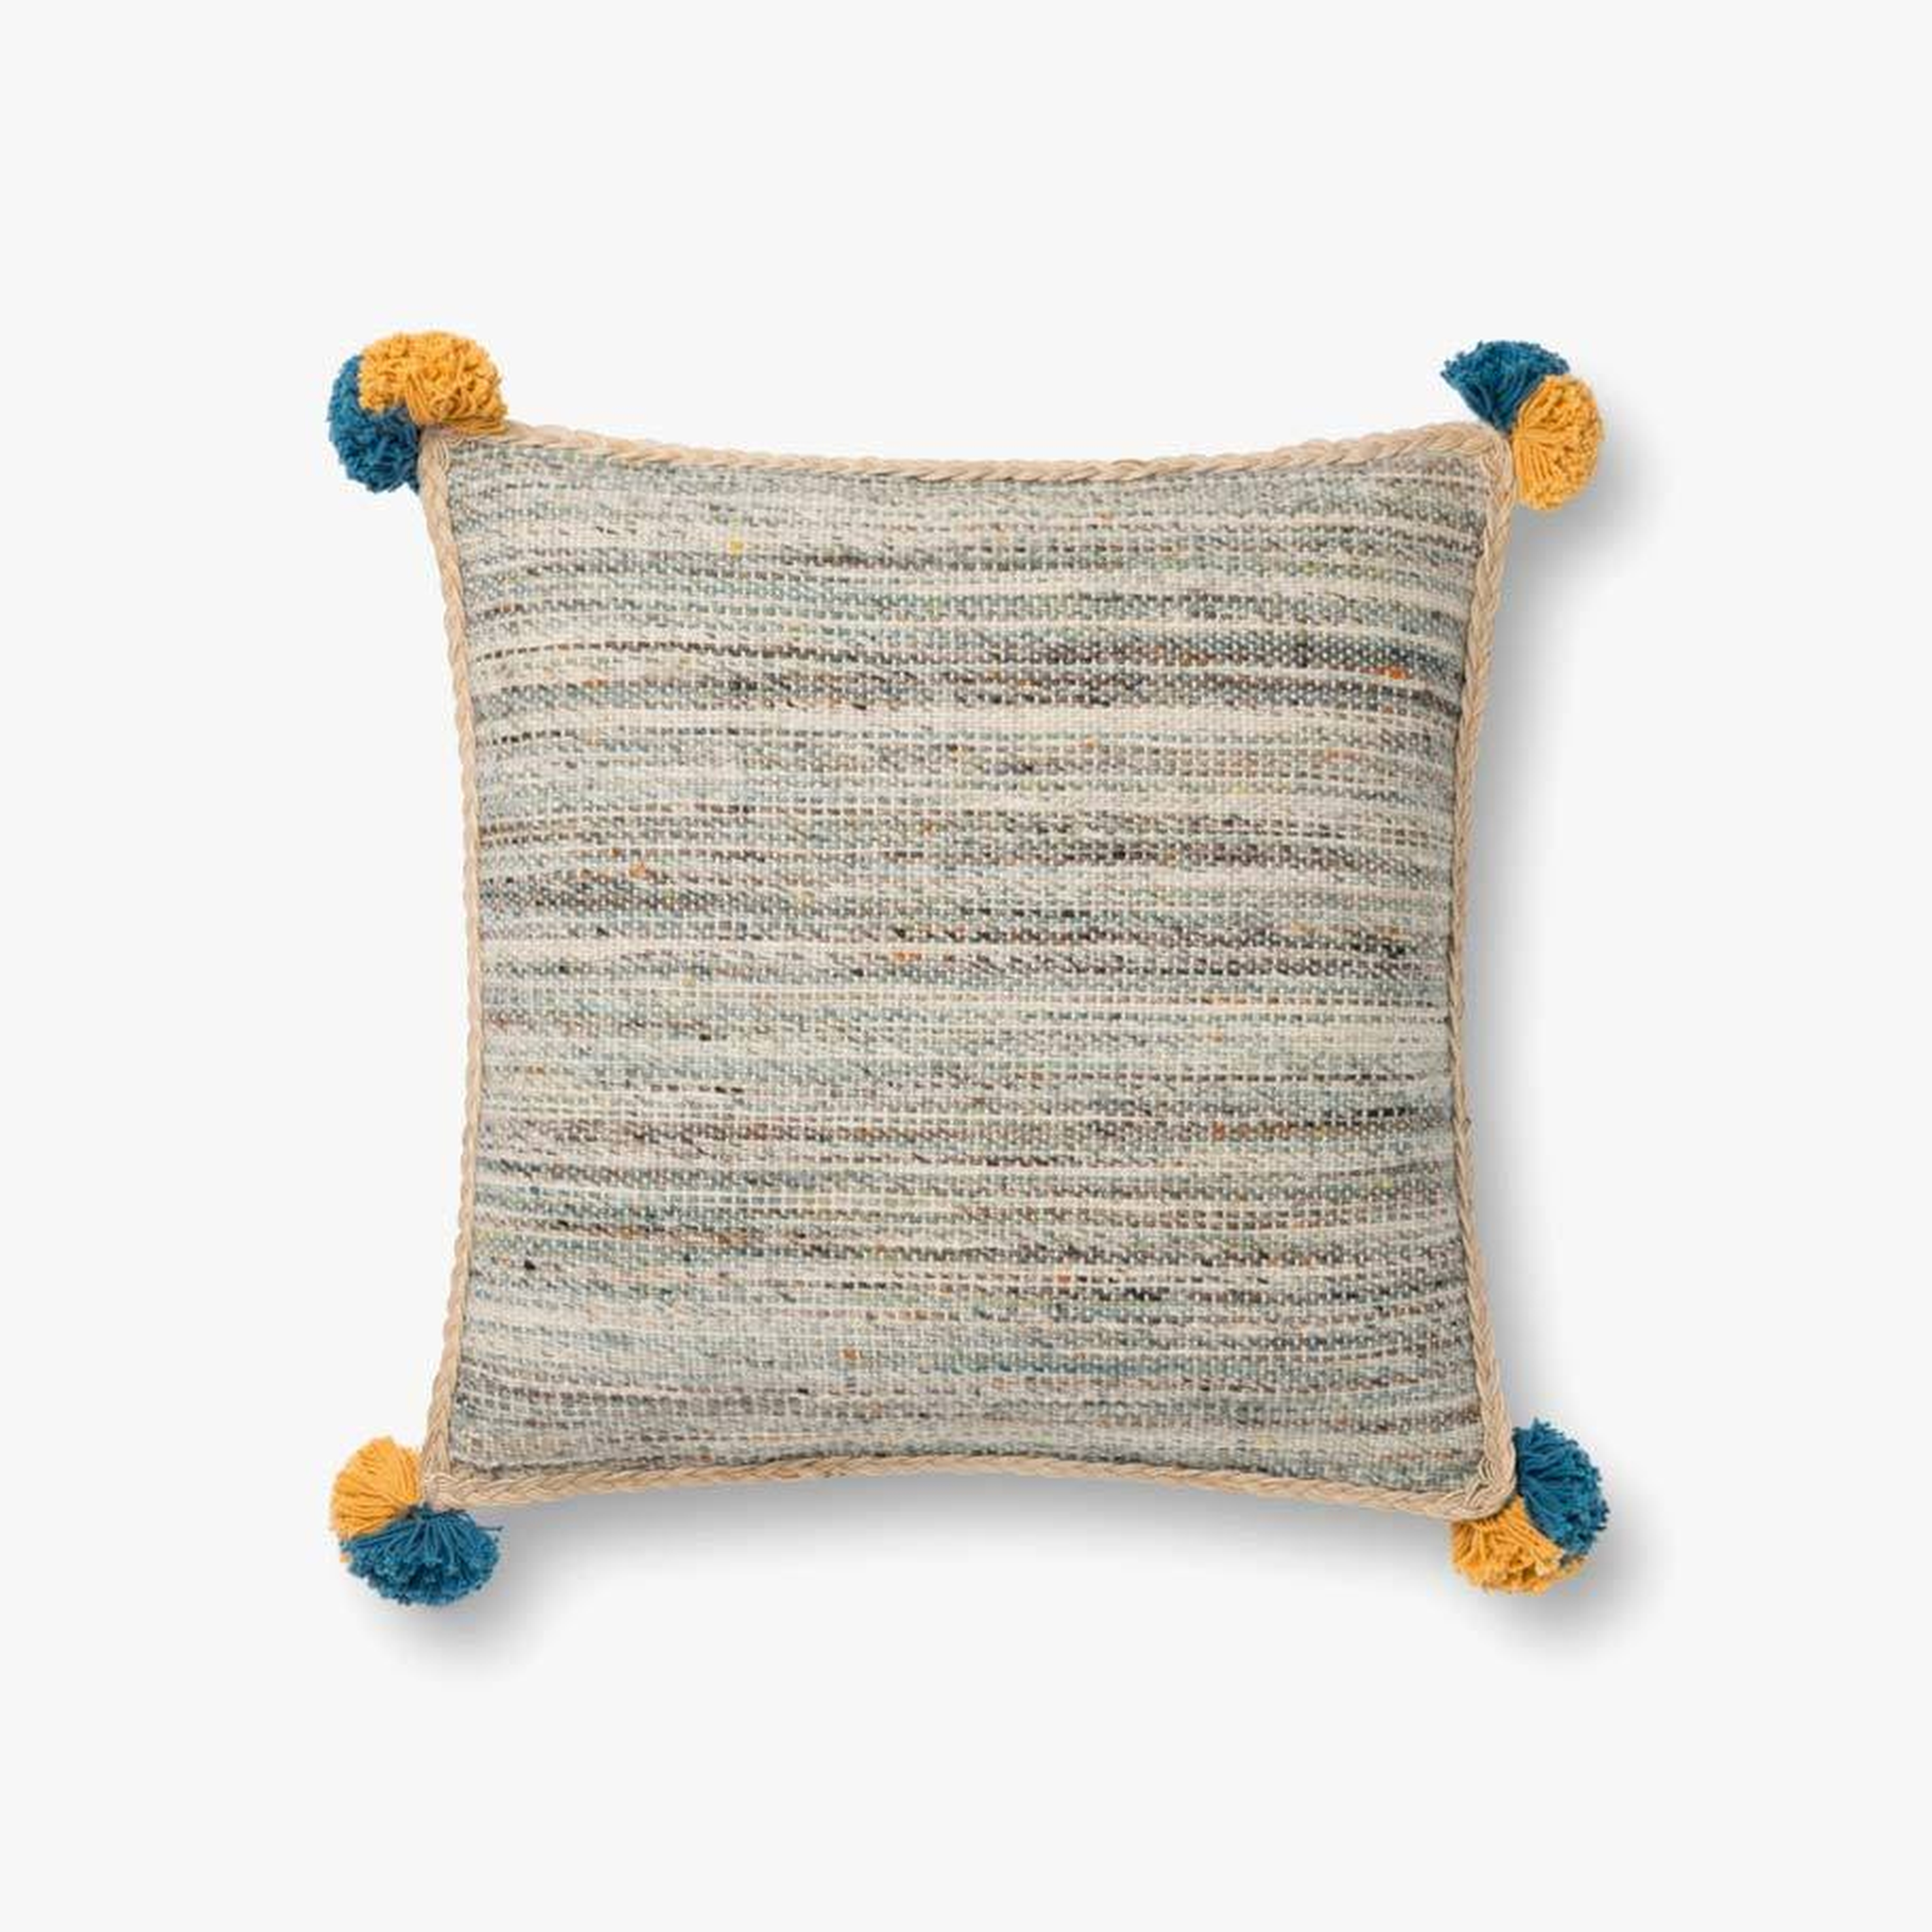 Natural Stripe Throw Pillow with Pom Pom Tassels, 18" x 18" - Justina Blakeney x Loloi Rugs